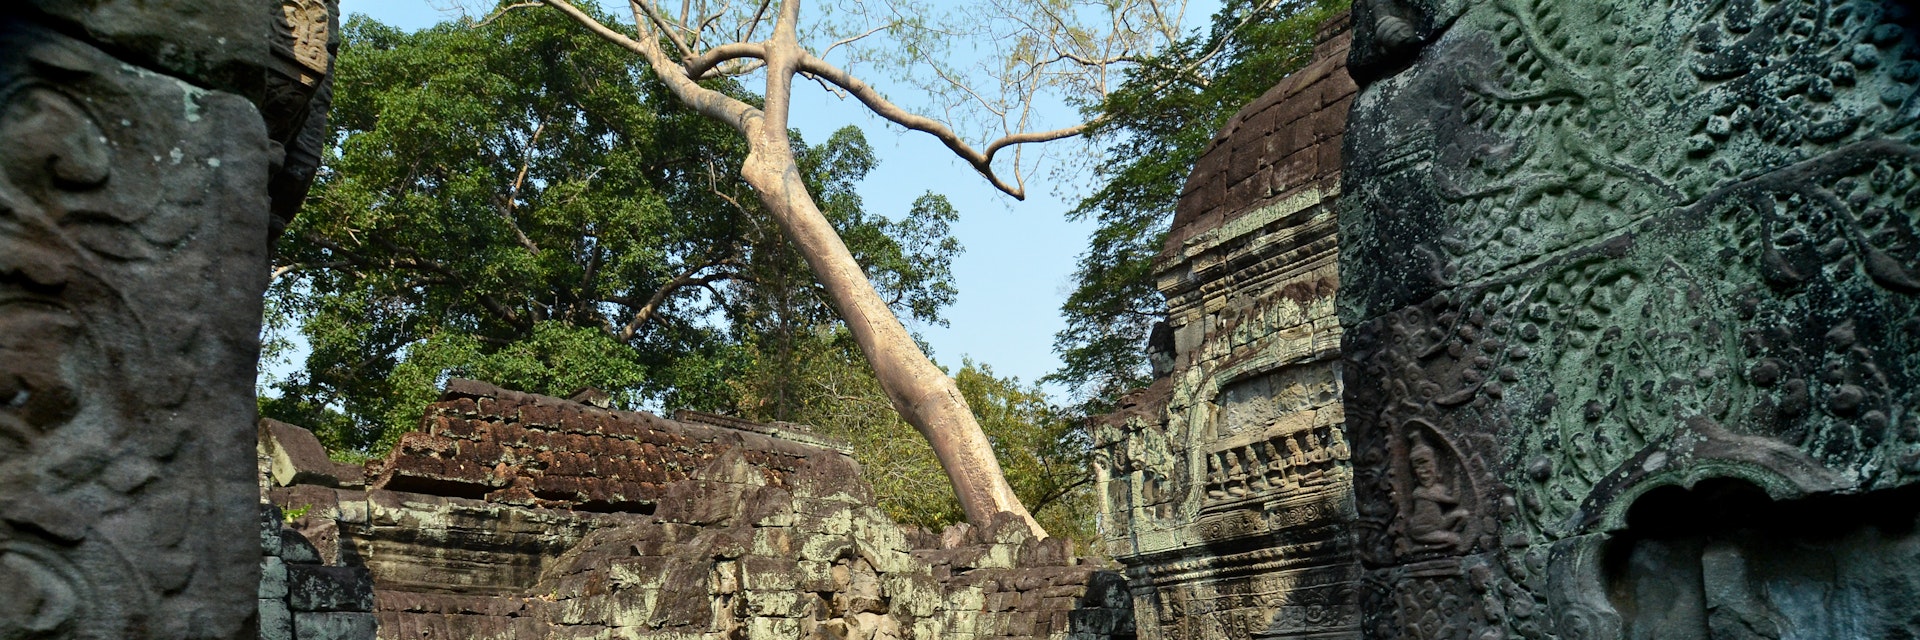 Preah Khan Kompong svay ruins.